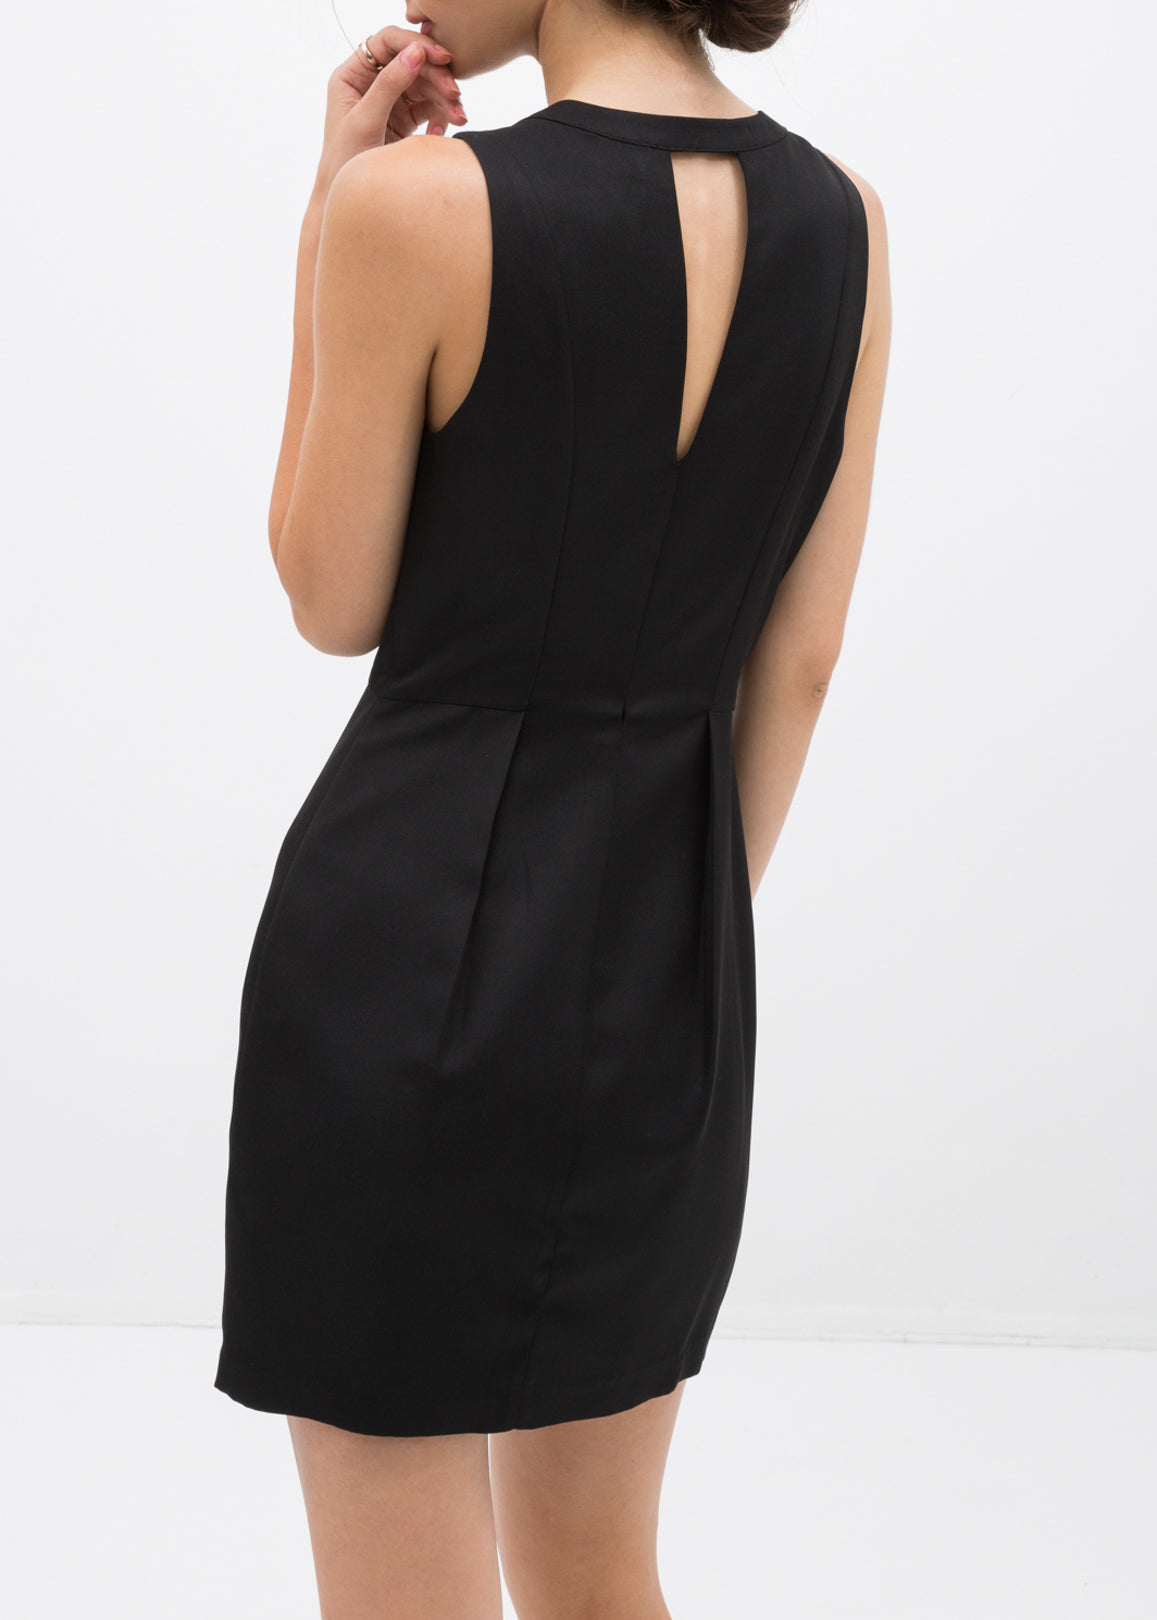 Women&#39;s Sleeveless Keyhole Dress In Black by Shop at Konus